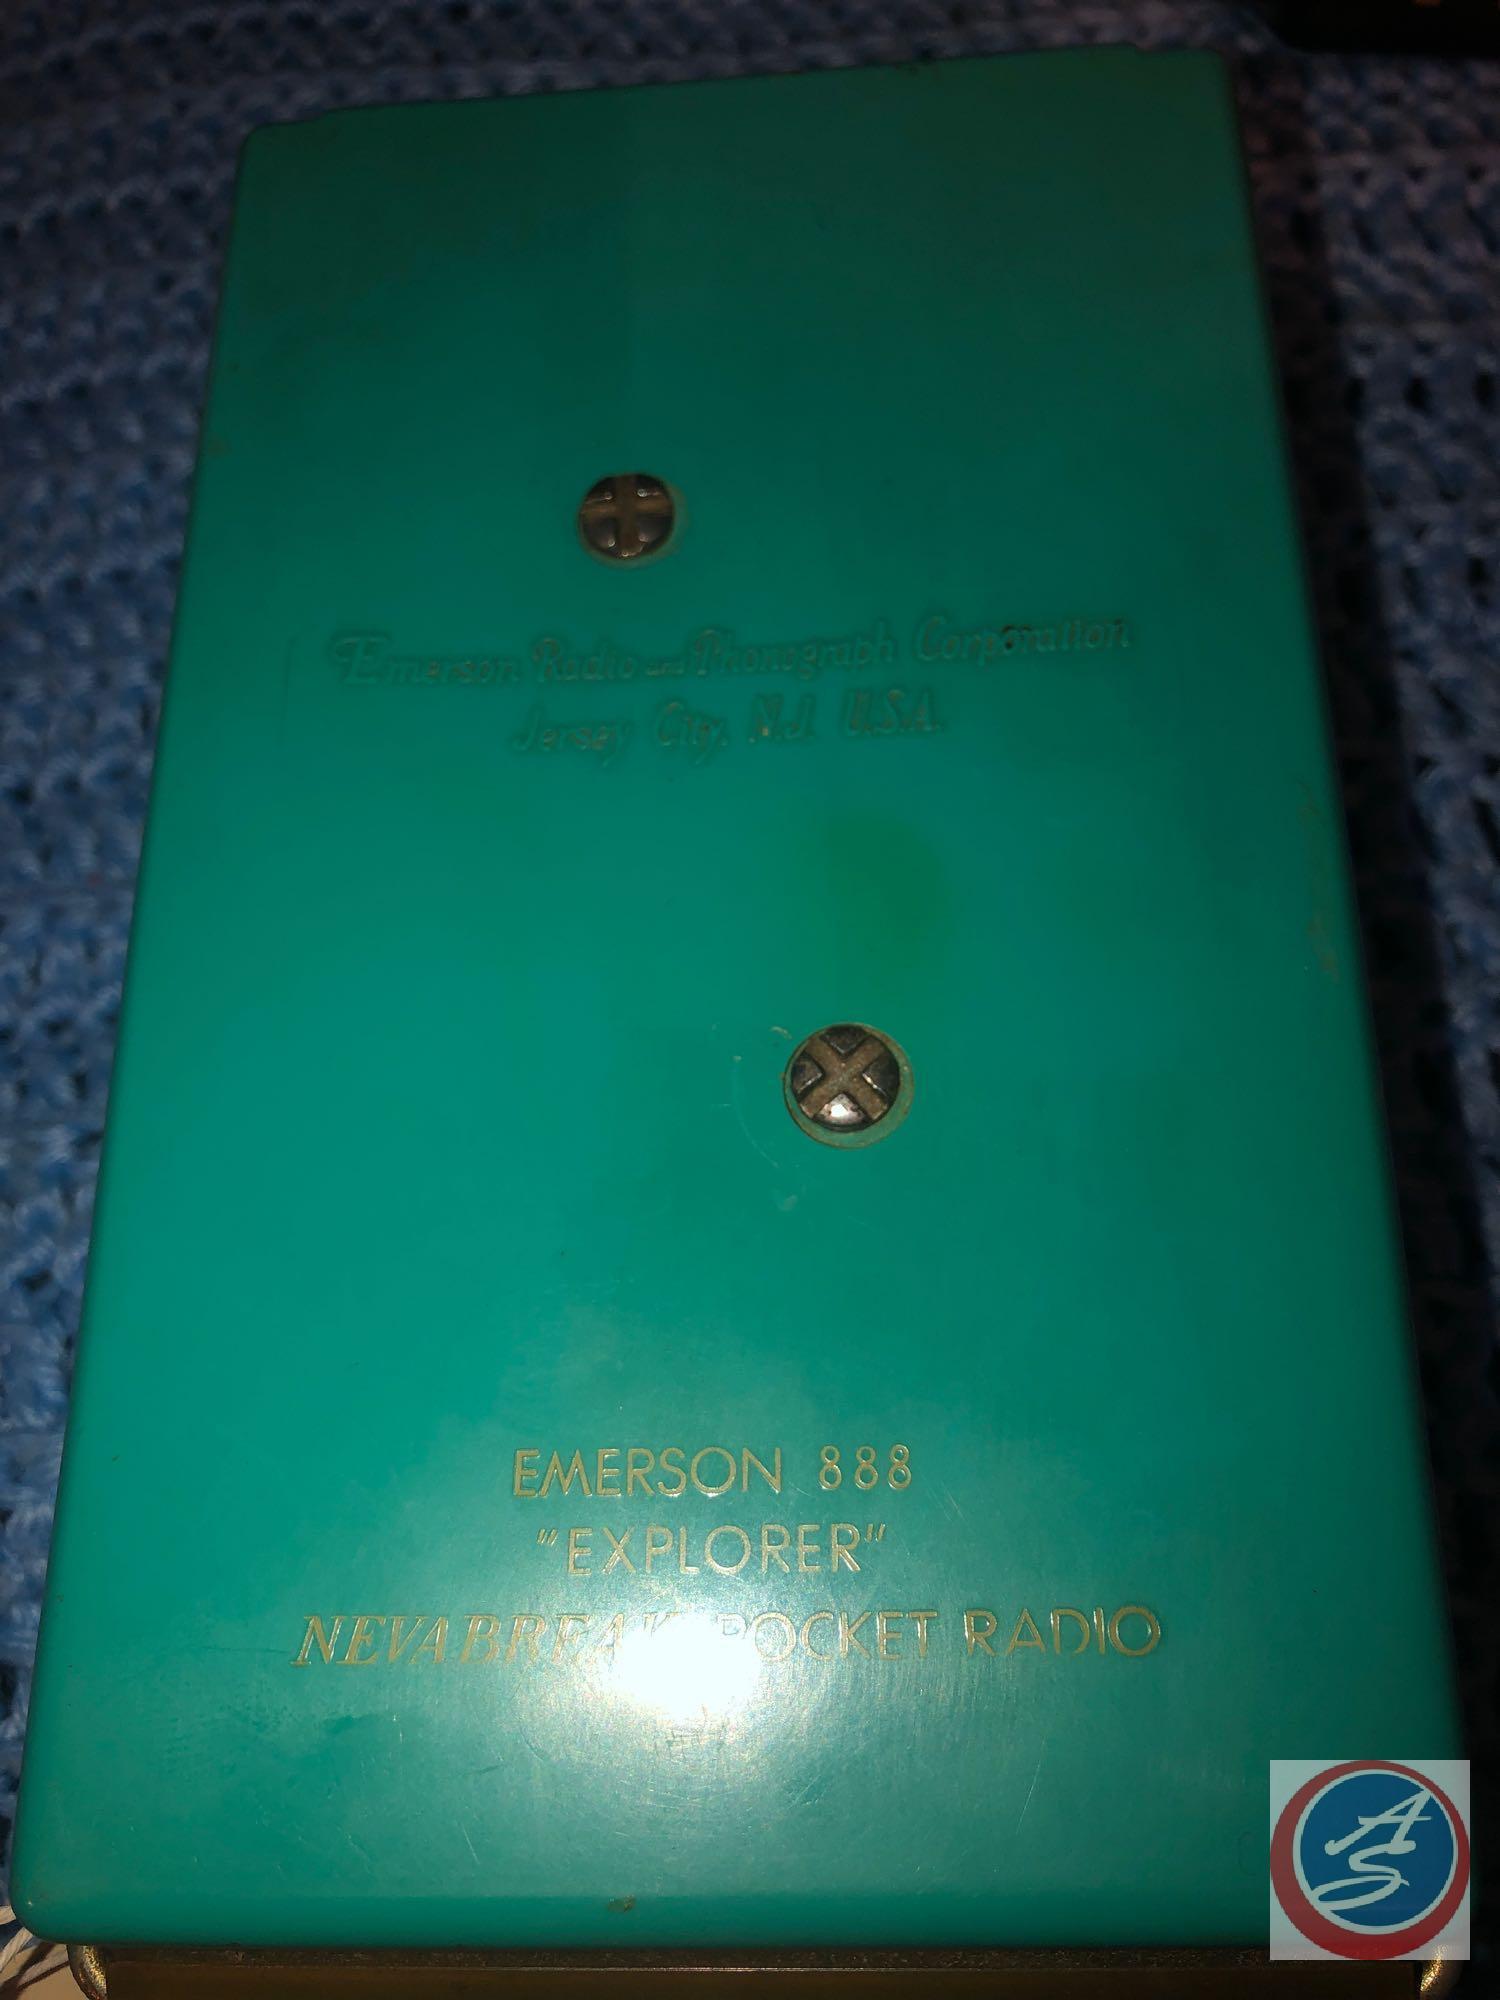 Emerson Model No. 888 Explorer Nevabreak Pocket Transistor Radio, Emerson Model No. 888 Nevabreak 8